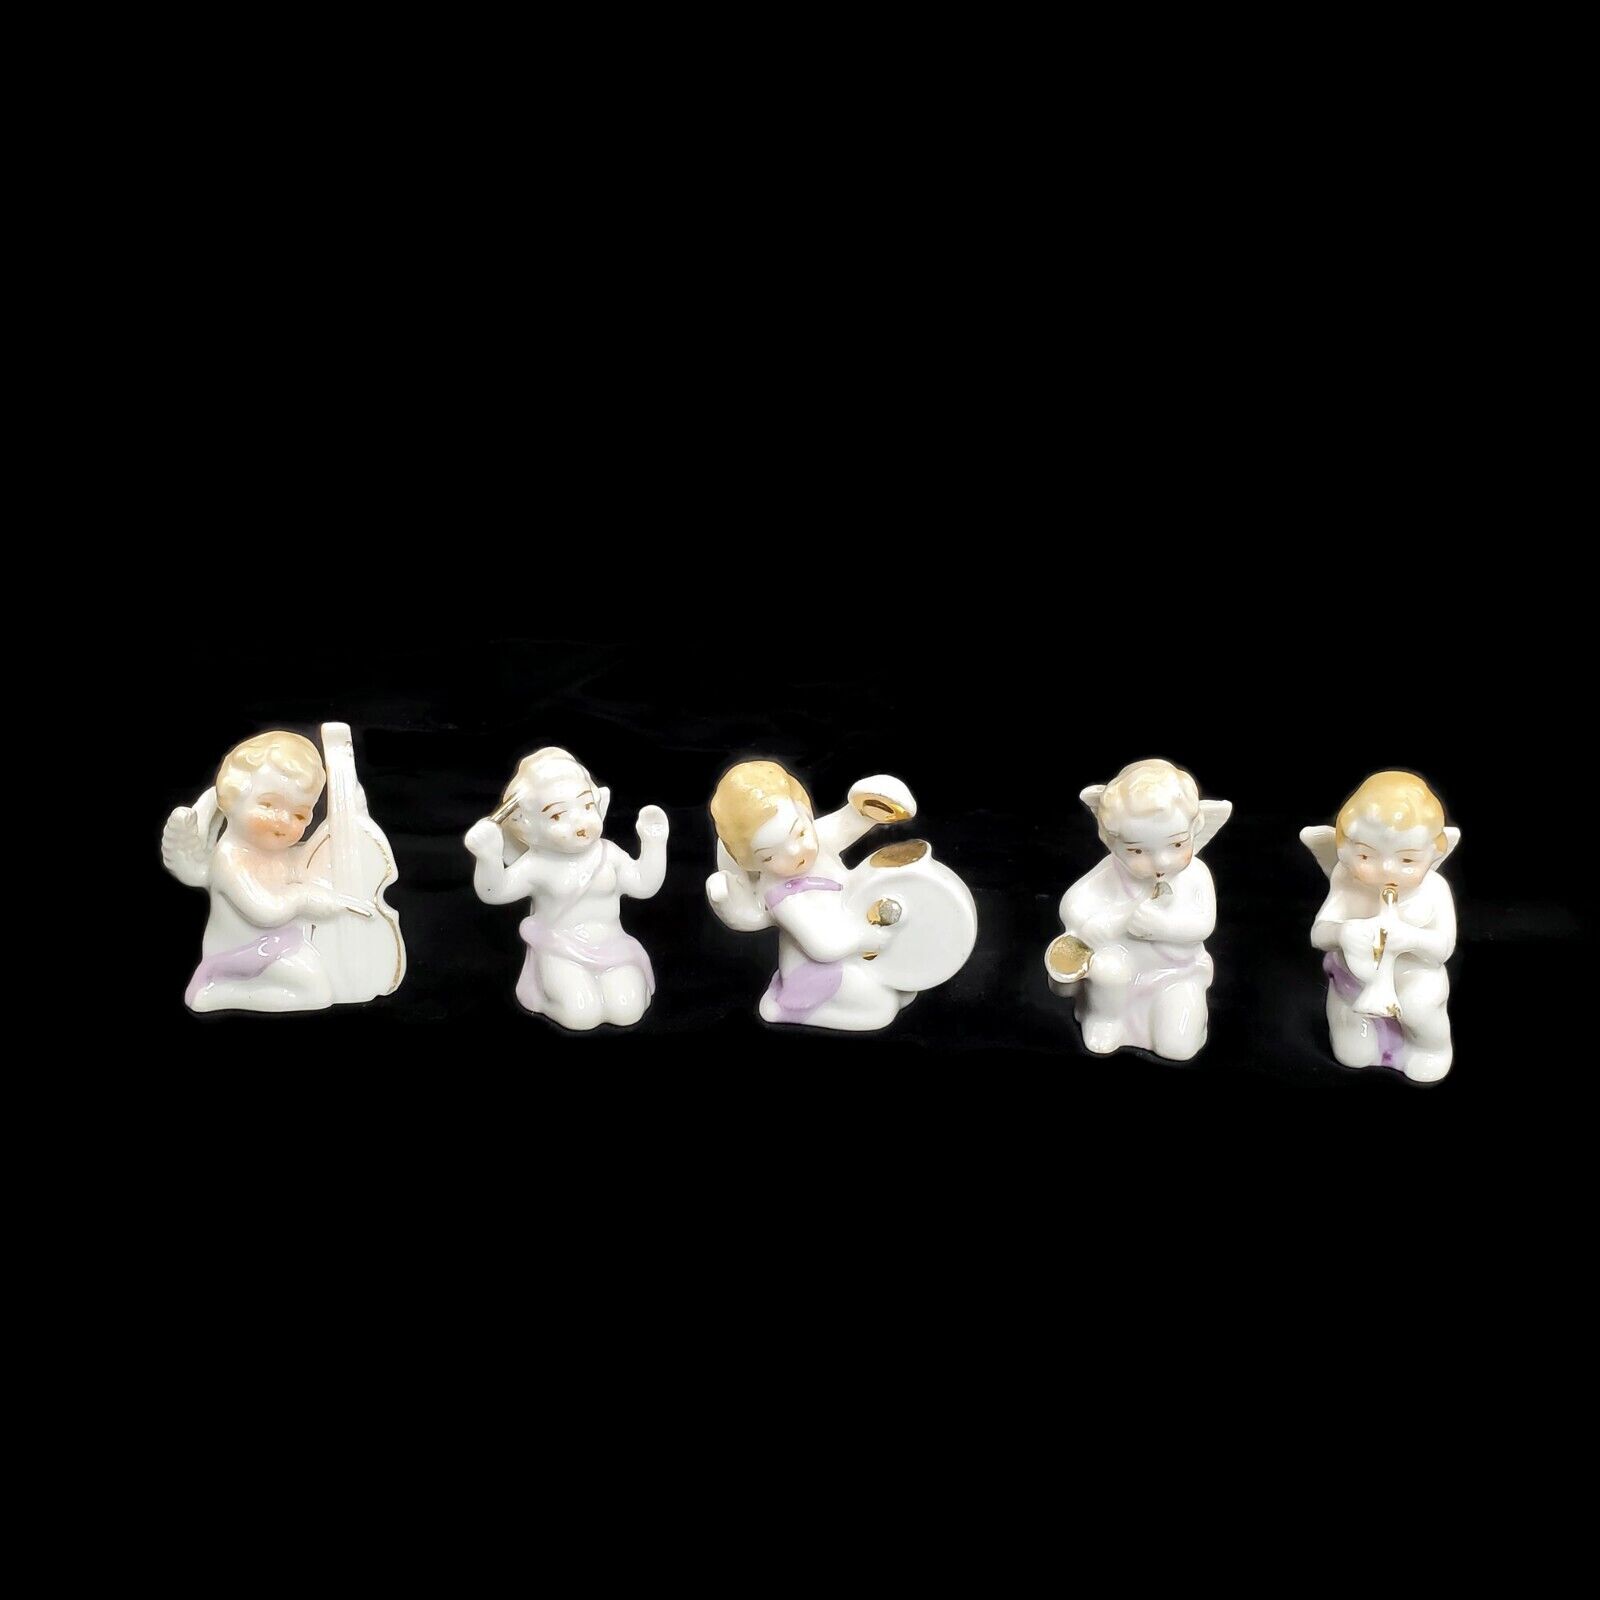 Vintage Occupied Japan Porcelain Musical Cherubs Angels Figurines 3inch Lot Of 5